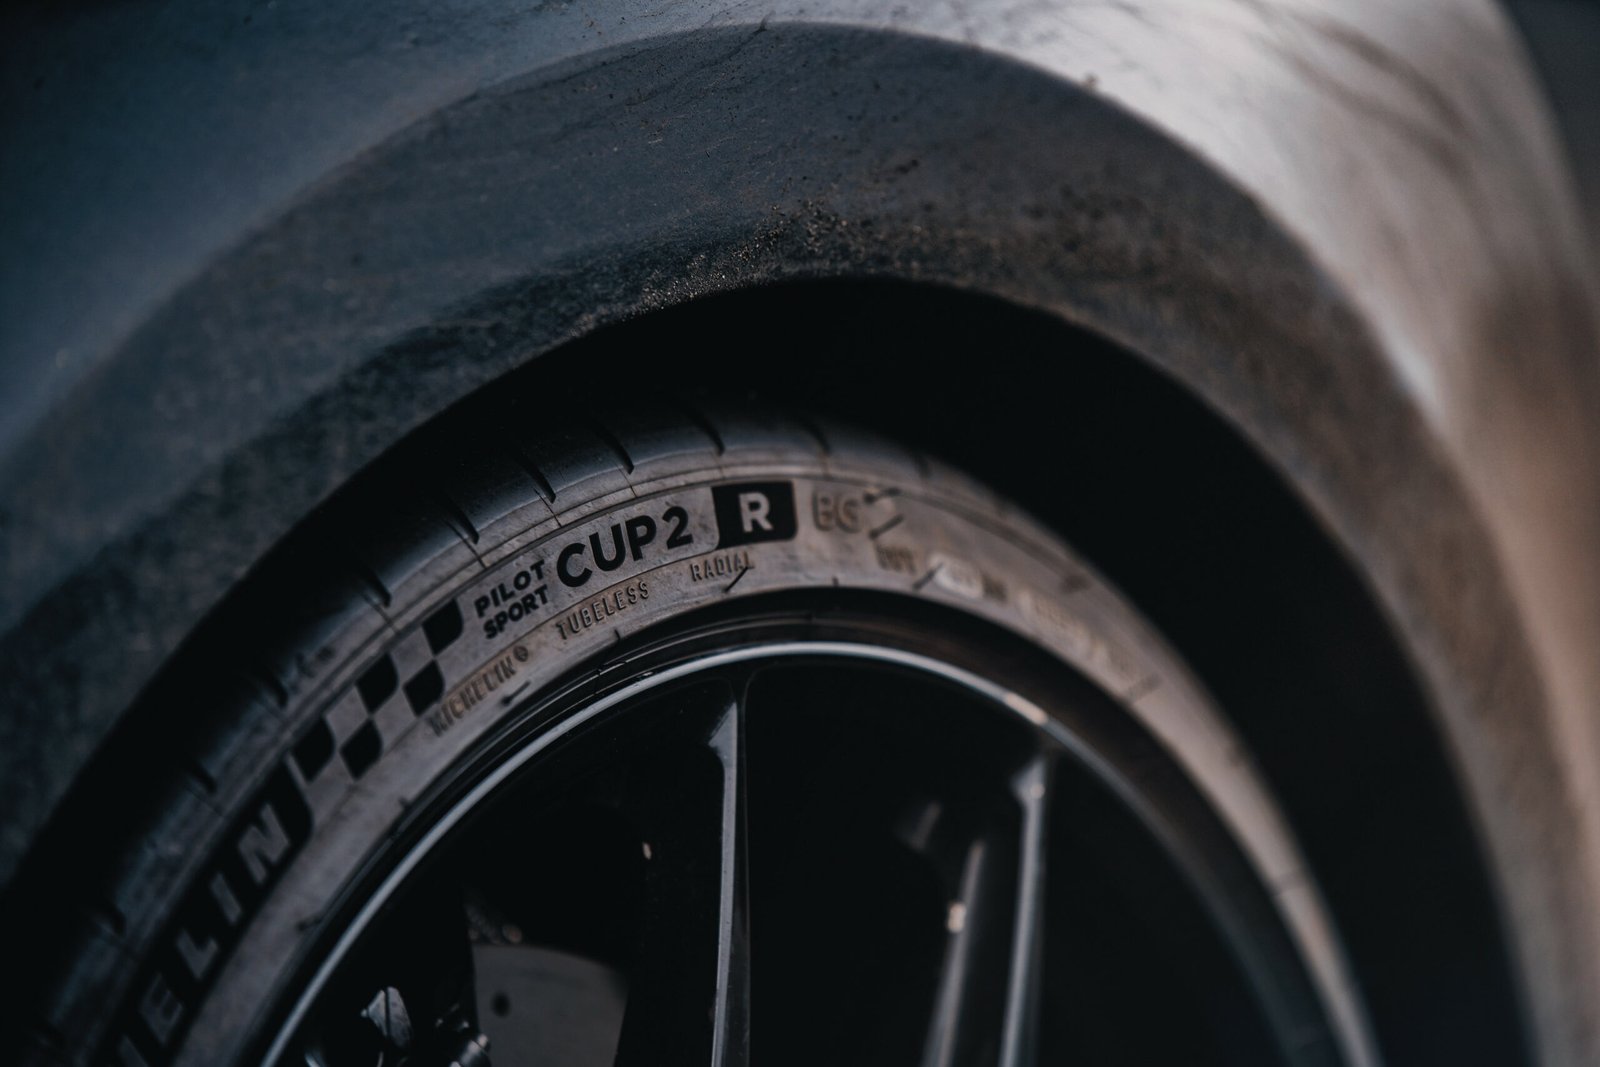 Bugatti Chiron Pur Sport – ‘Drifting The C’